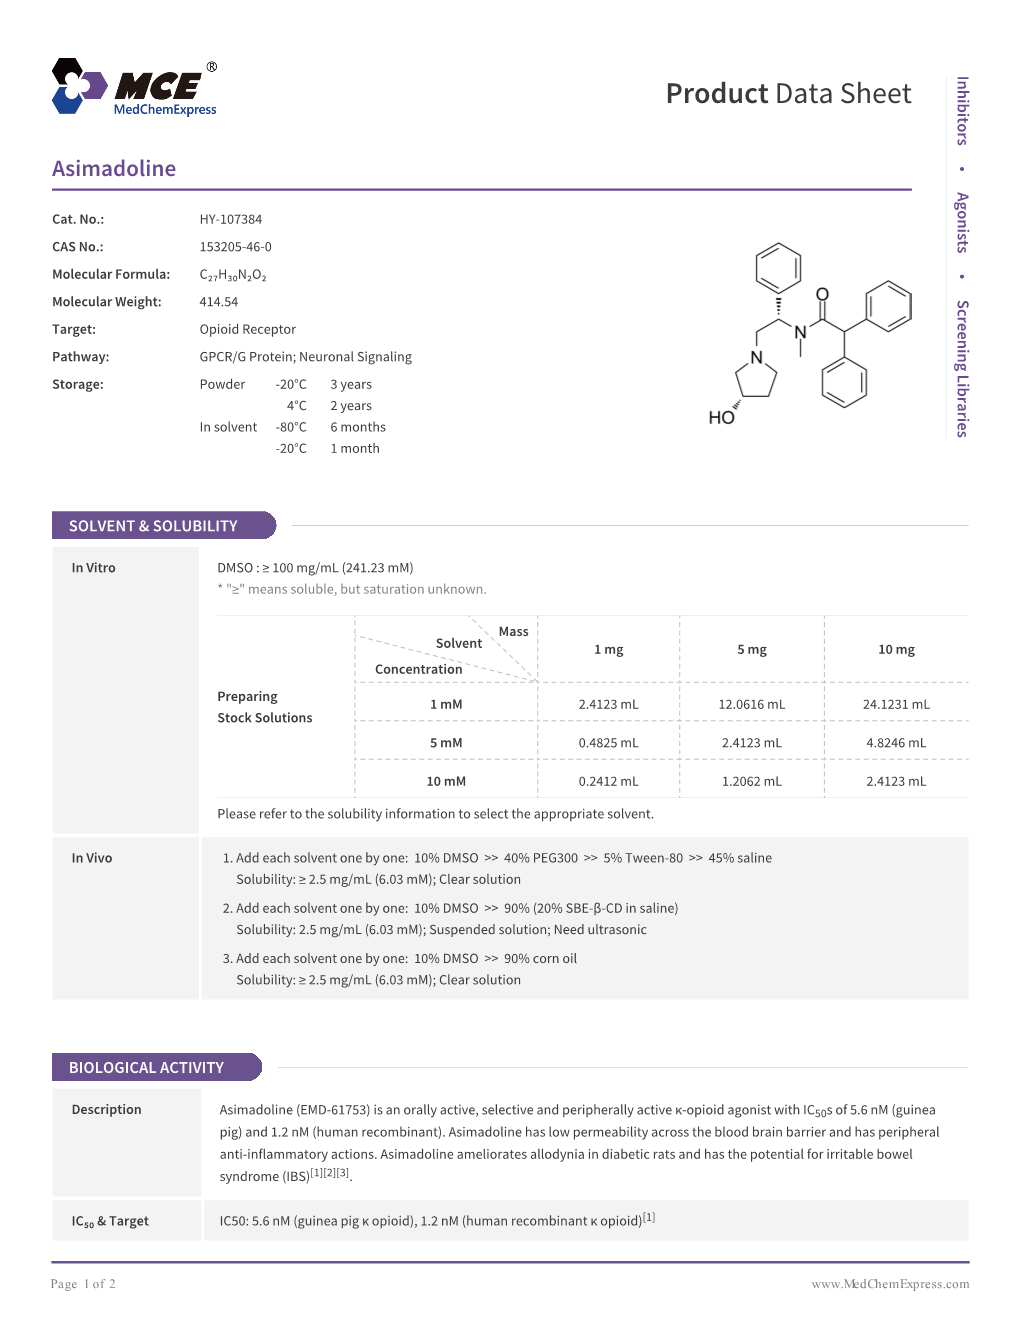 Asimadoline | Medchemexpress